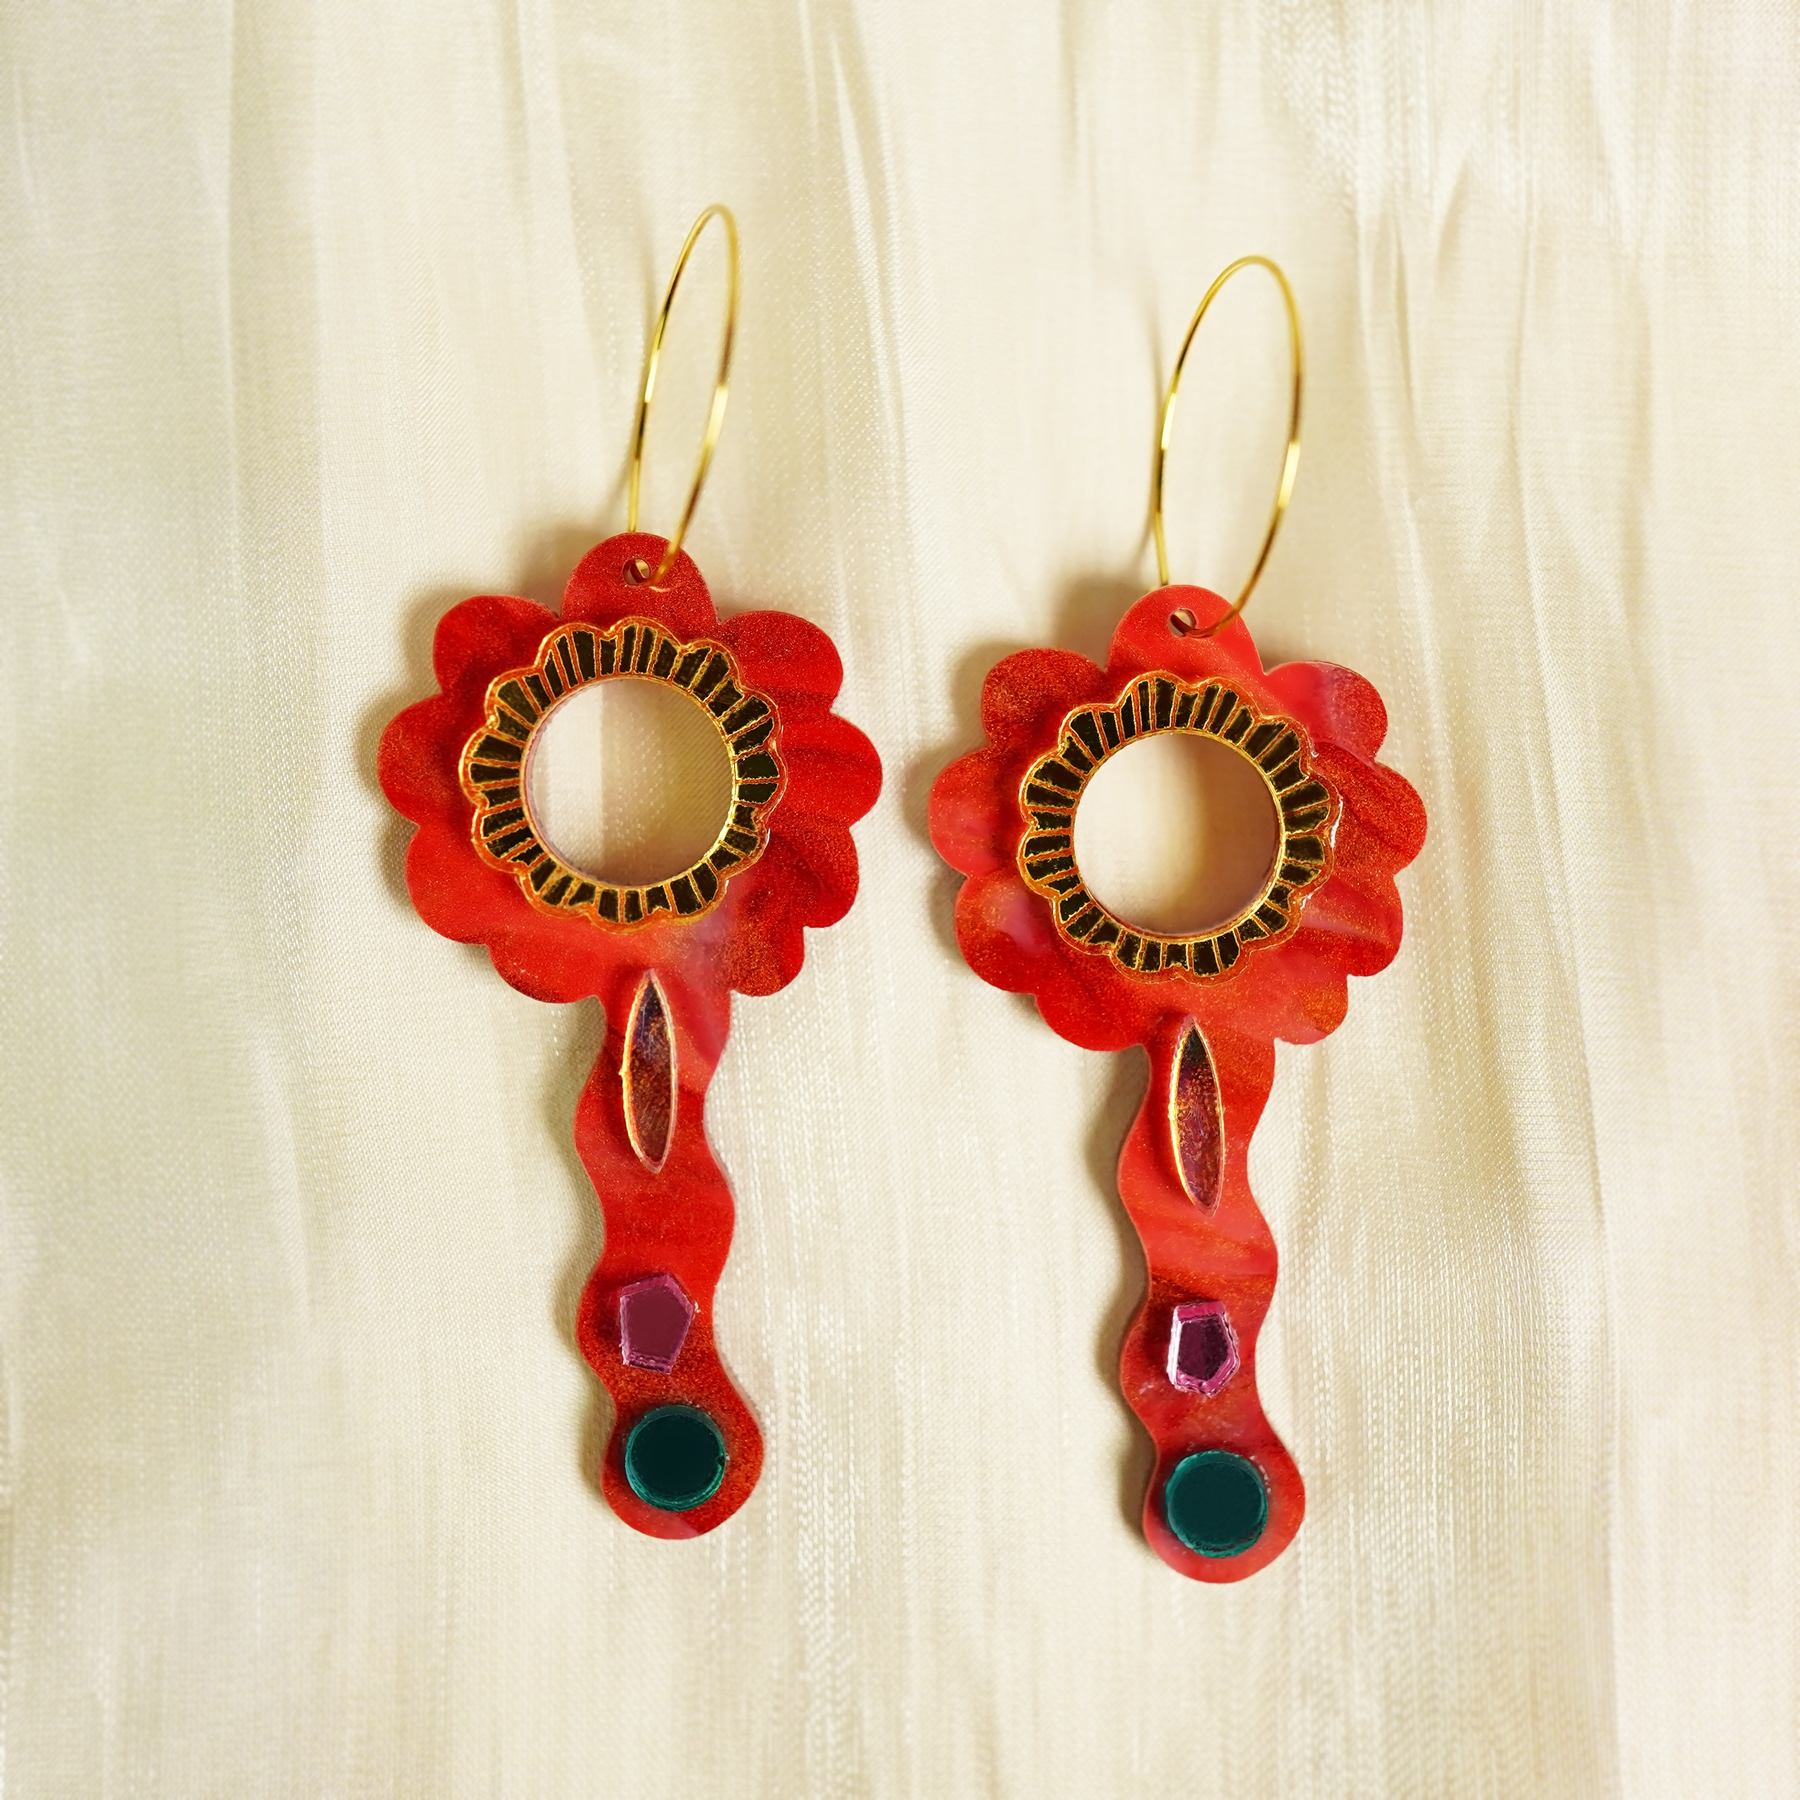 Buy Red Flower Earrings, Red Rose Earrings, S925 Earrings, Sterling Silver  Post Earrings, Small Rose Earrings, Christmas Flower Earrings Online in  India - Etsy